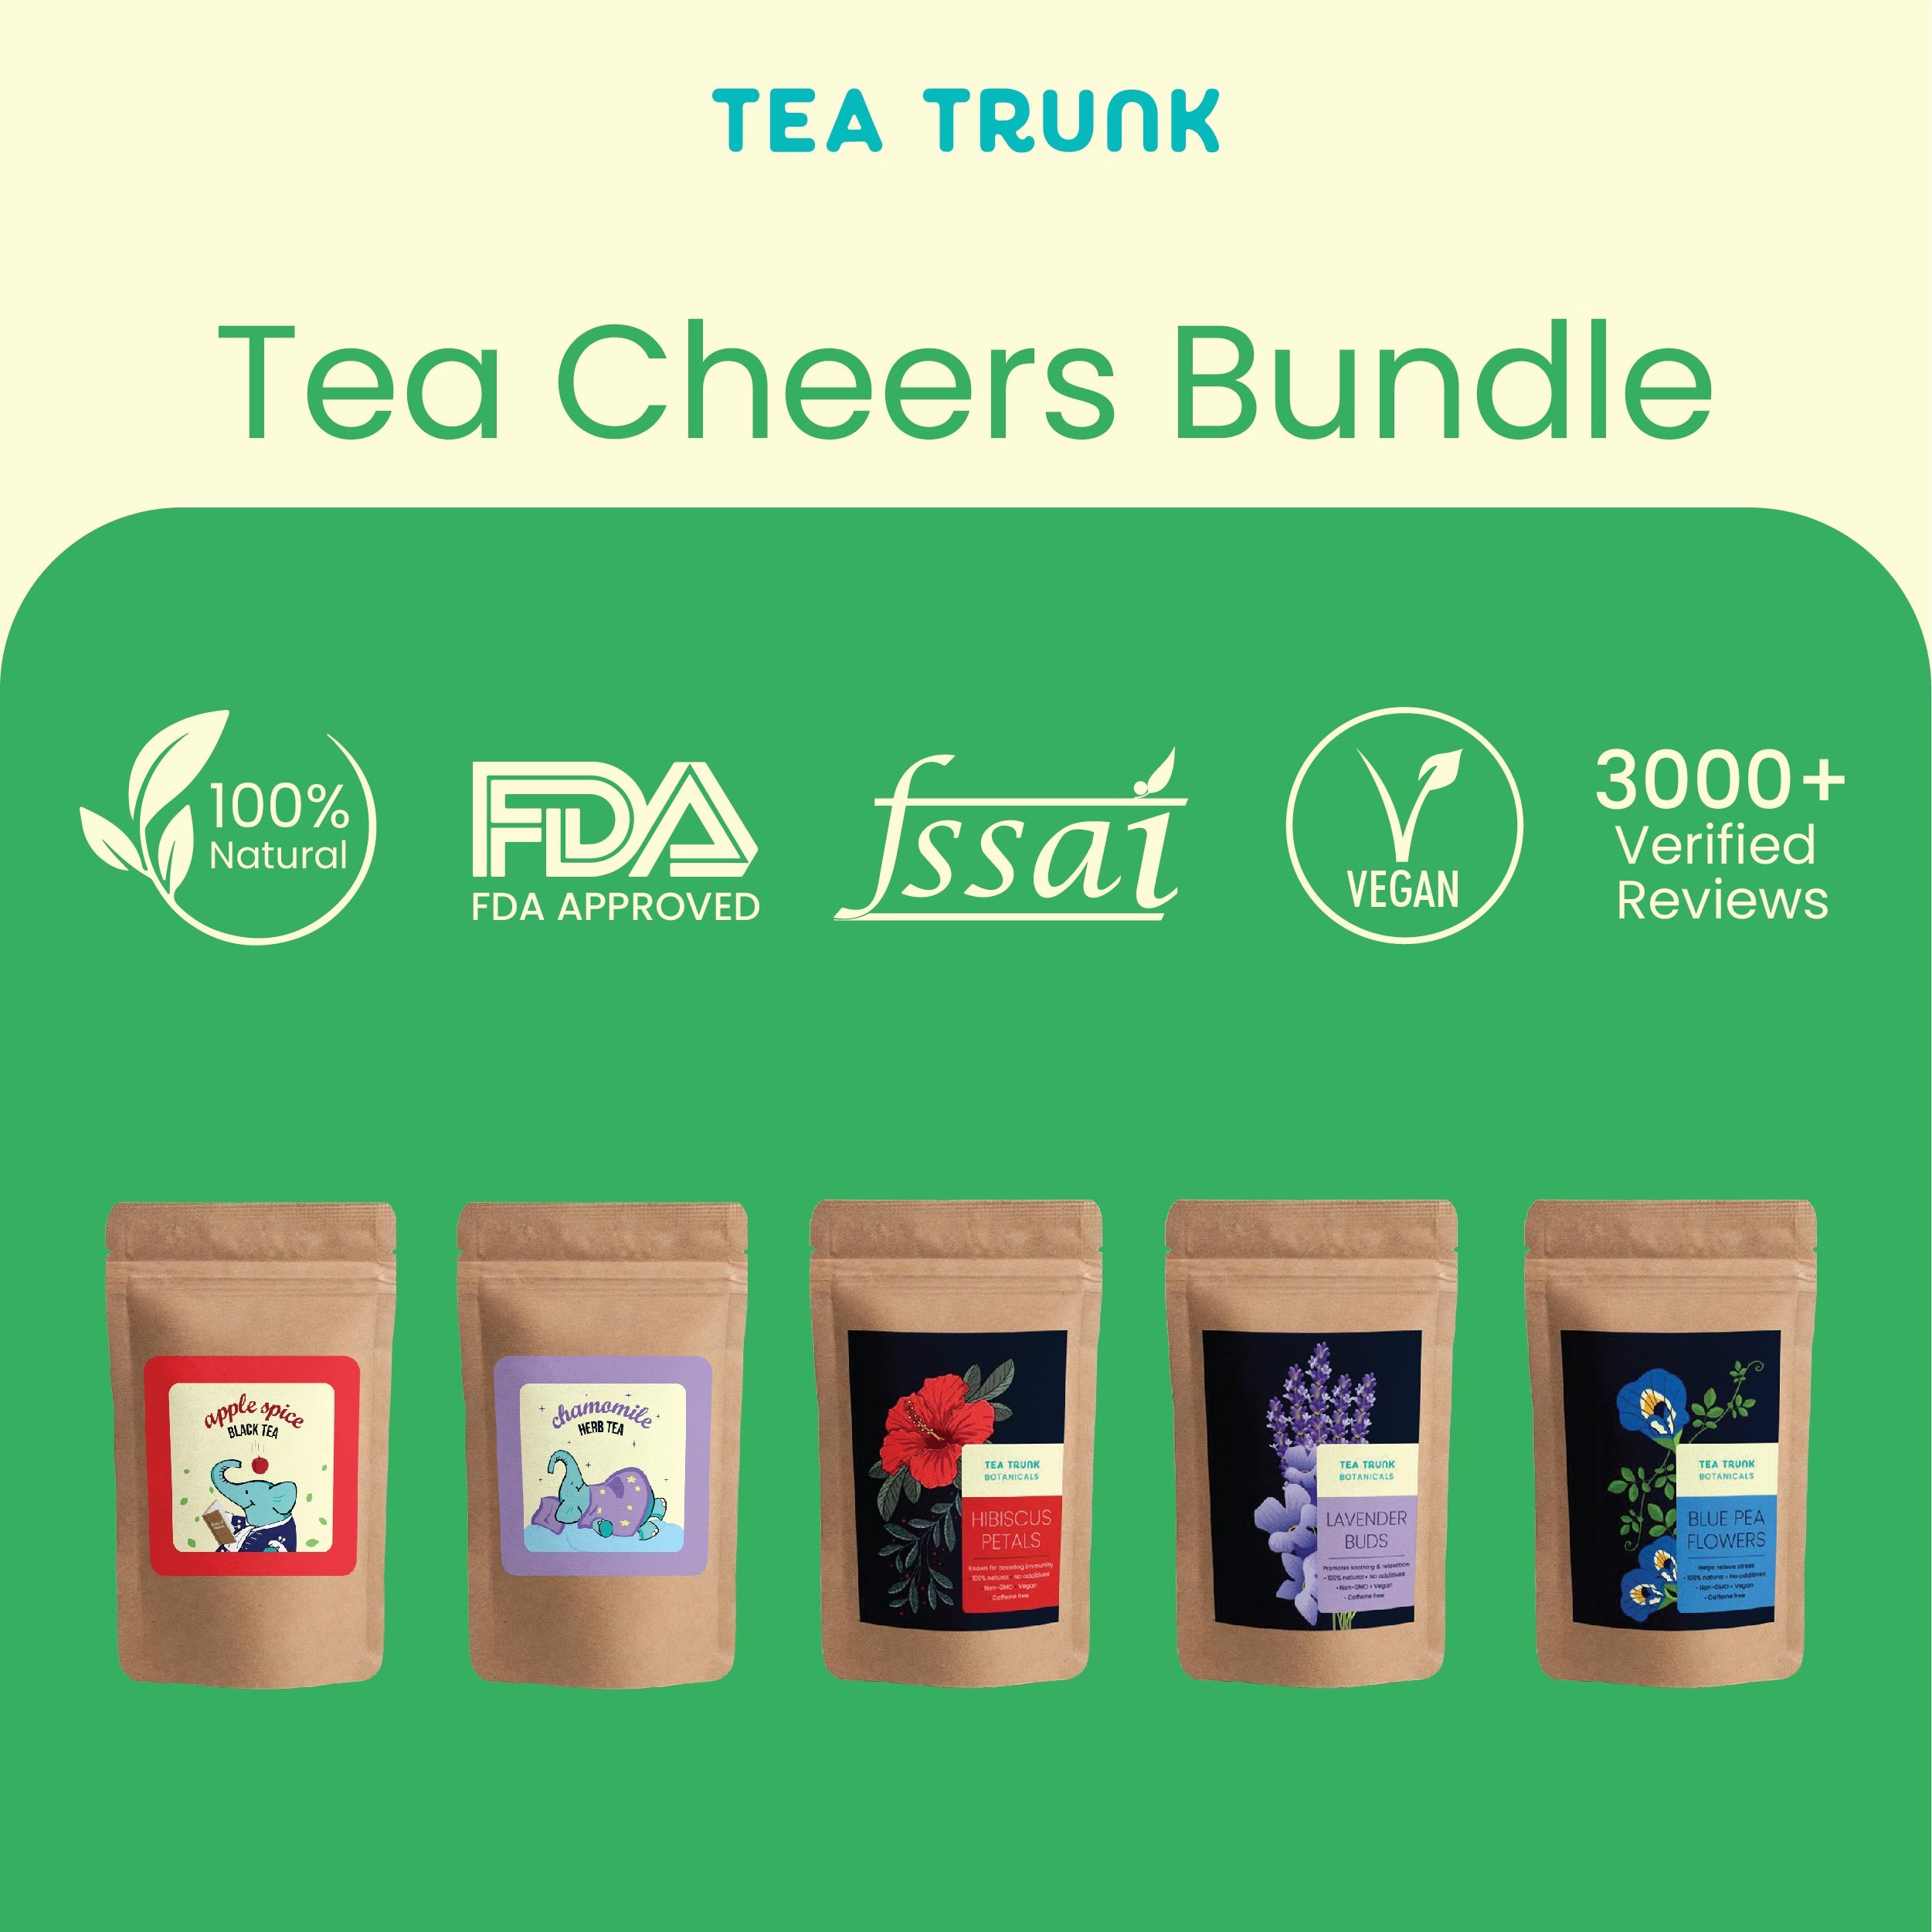 Tea Cheers Bundle